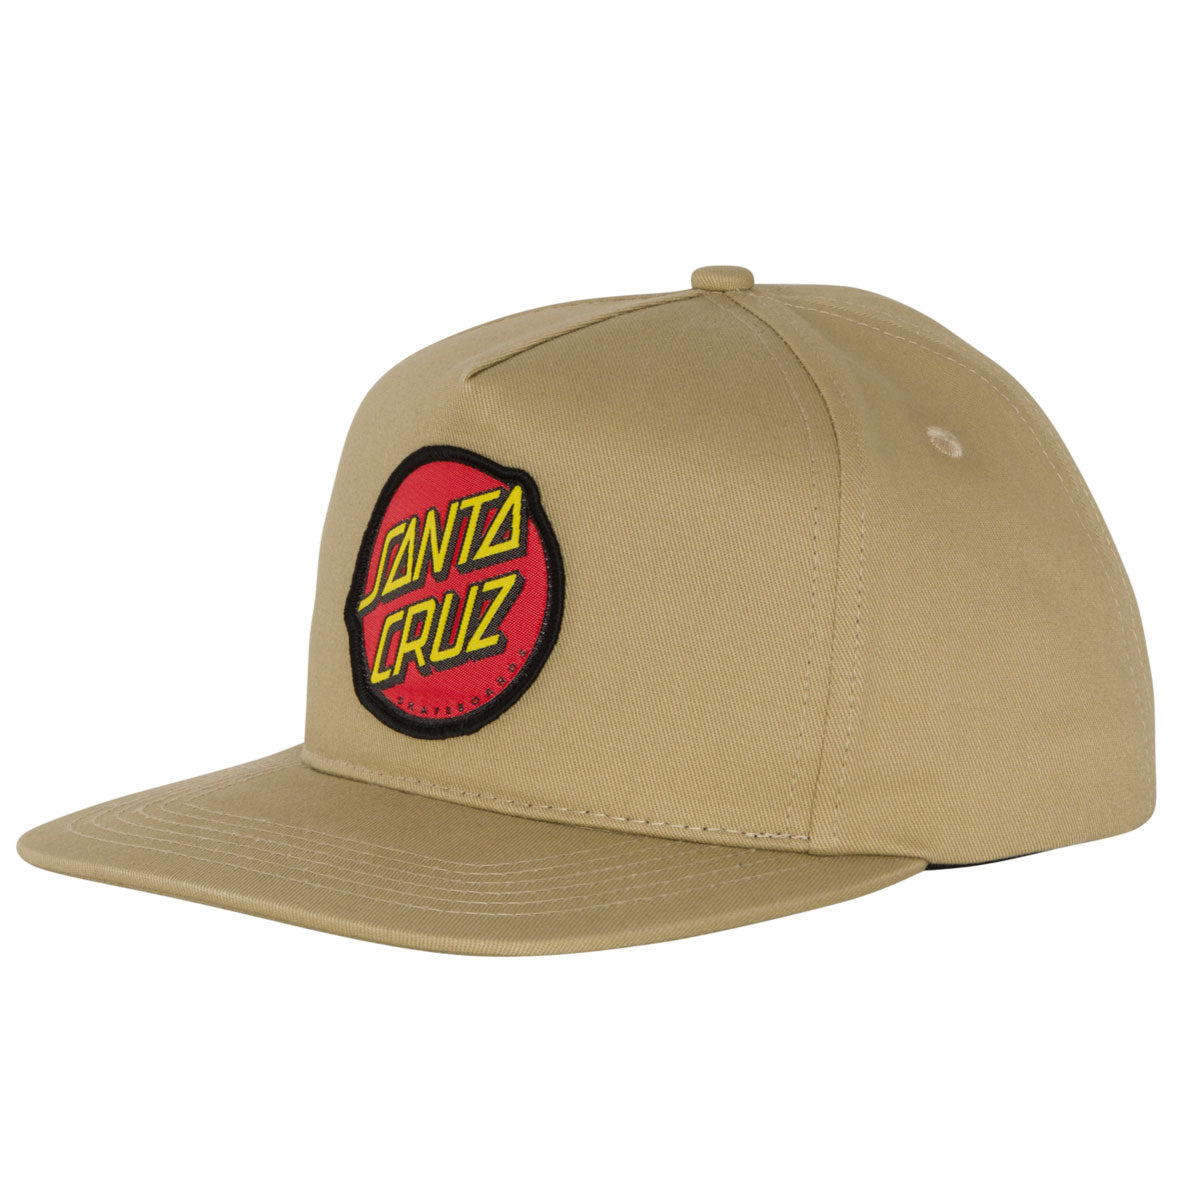 Santa Cruz Classic Snapback Hat - Tan image 1